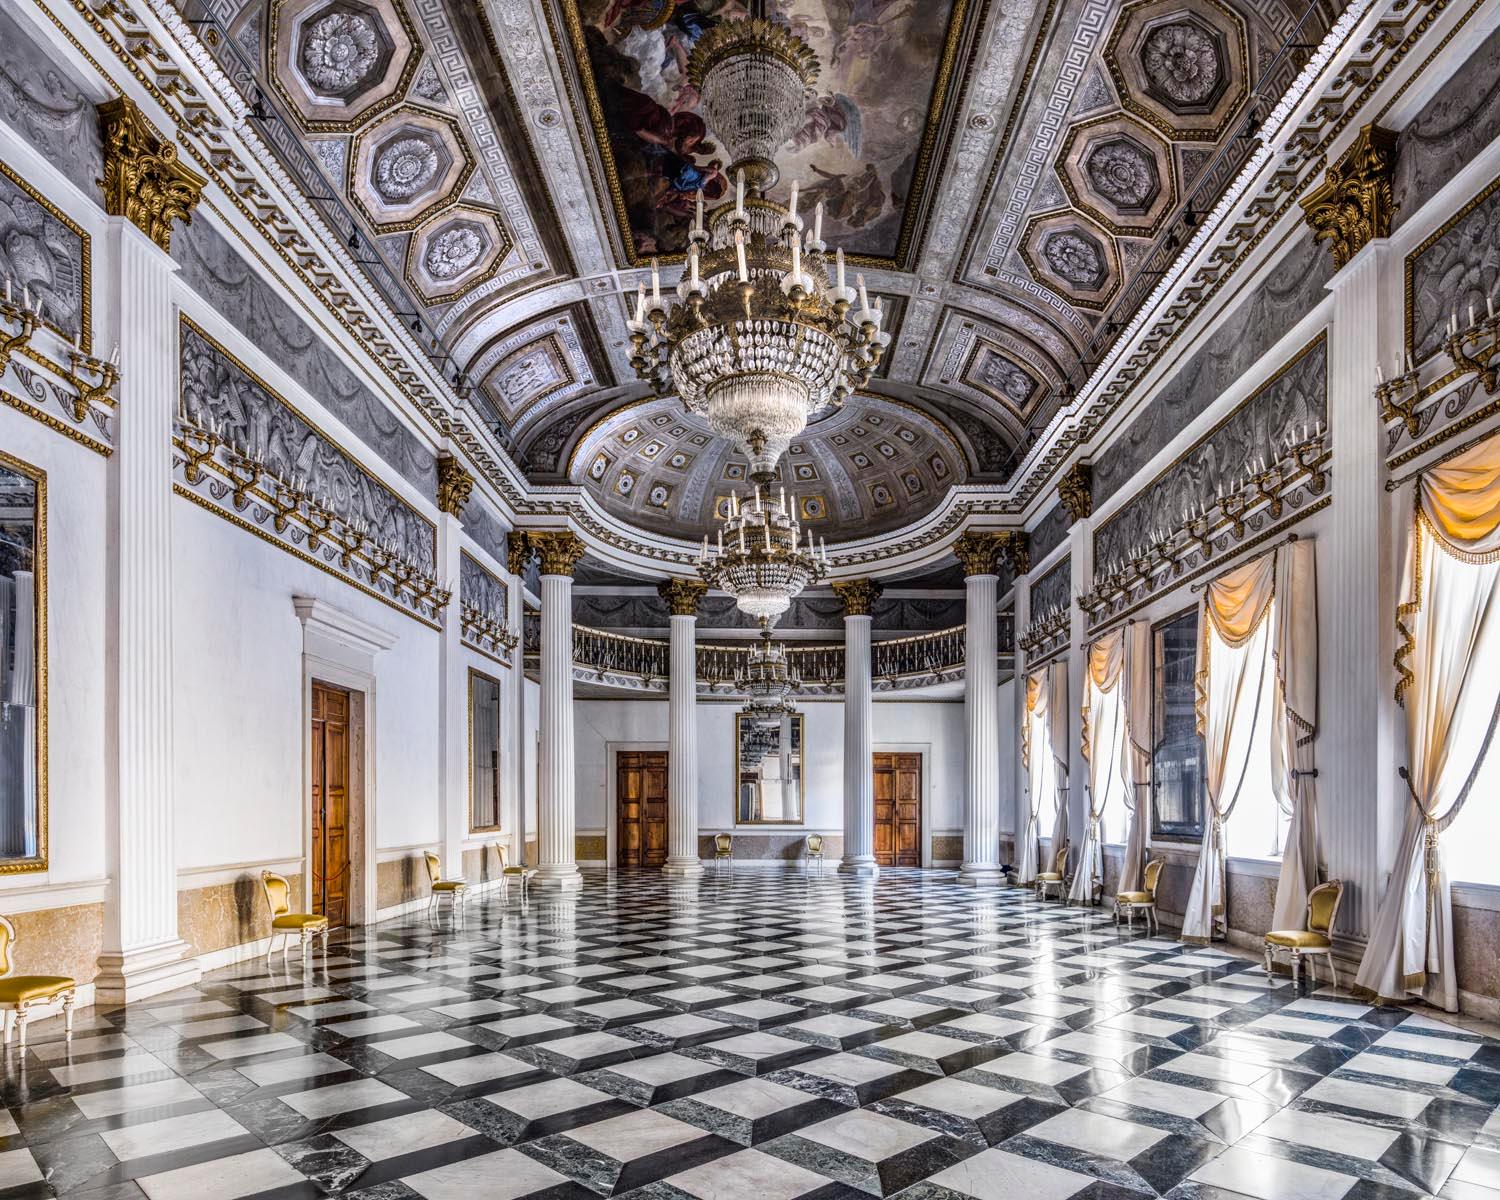 Massimo Listri - Palazzo Reale, Ballroom, Venice, Italy (Portrait of Interiors)